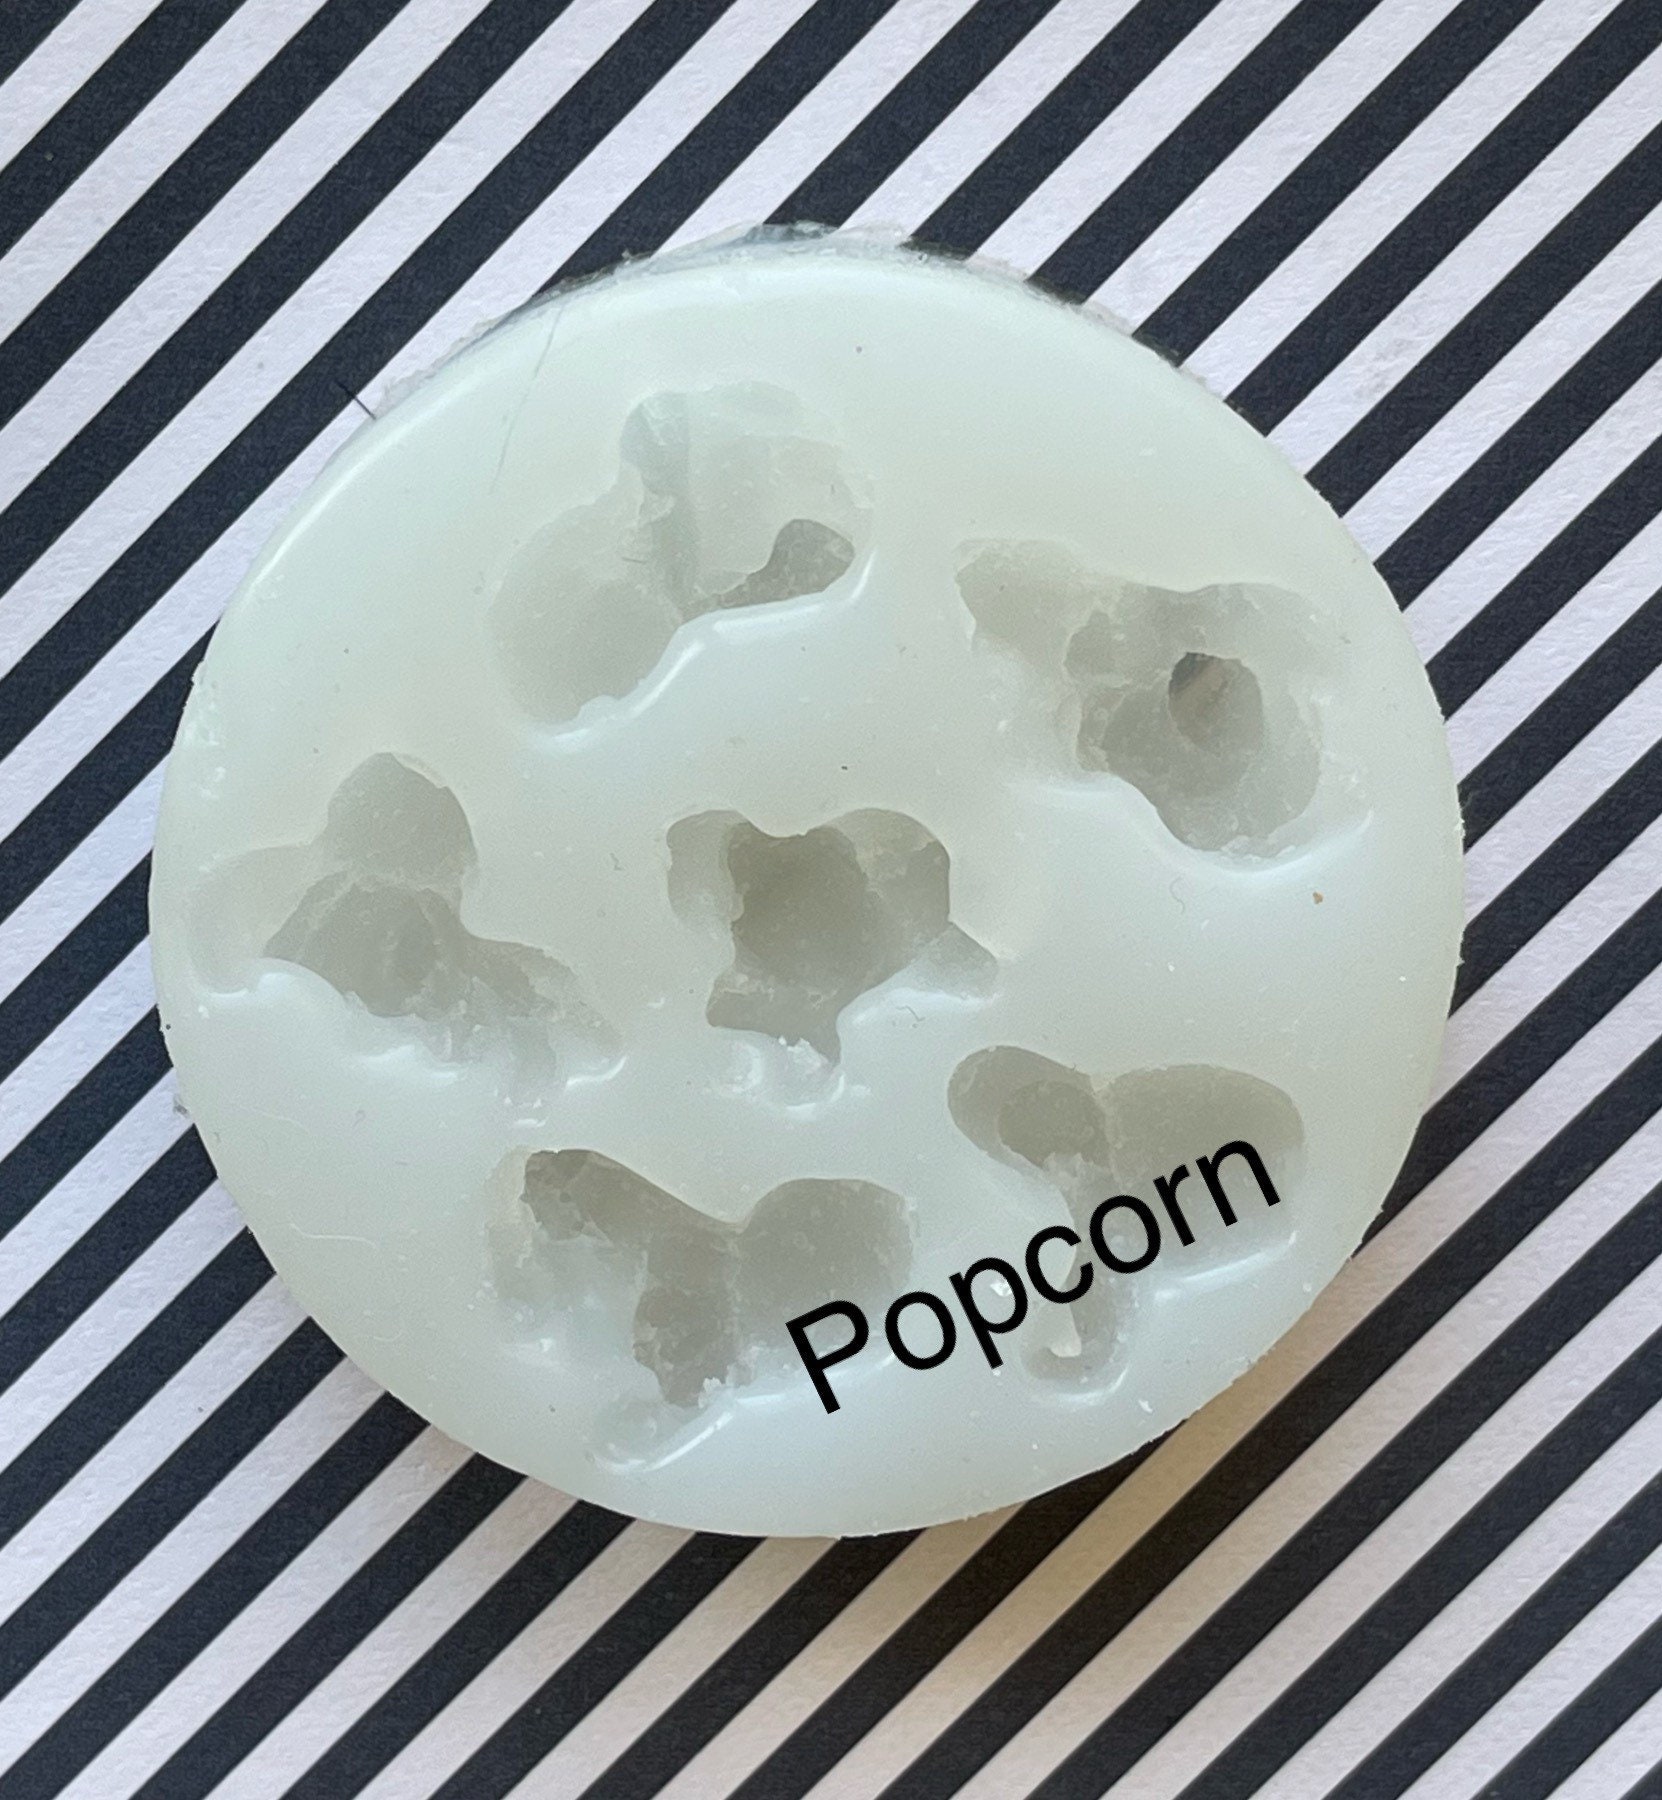 Caramel Popcorn 15-Cavity Silicone Mold